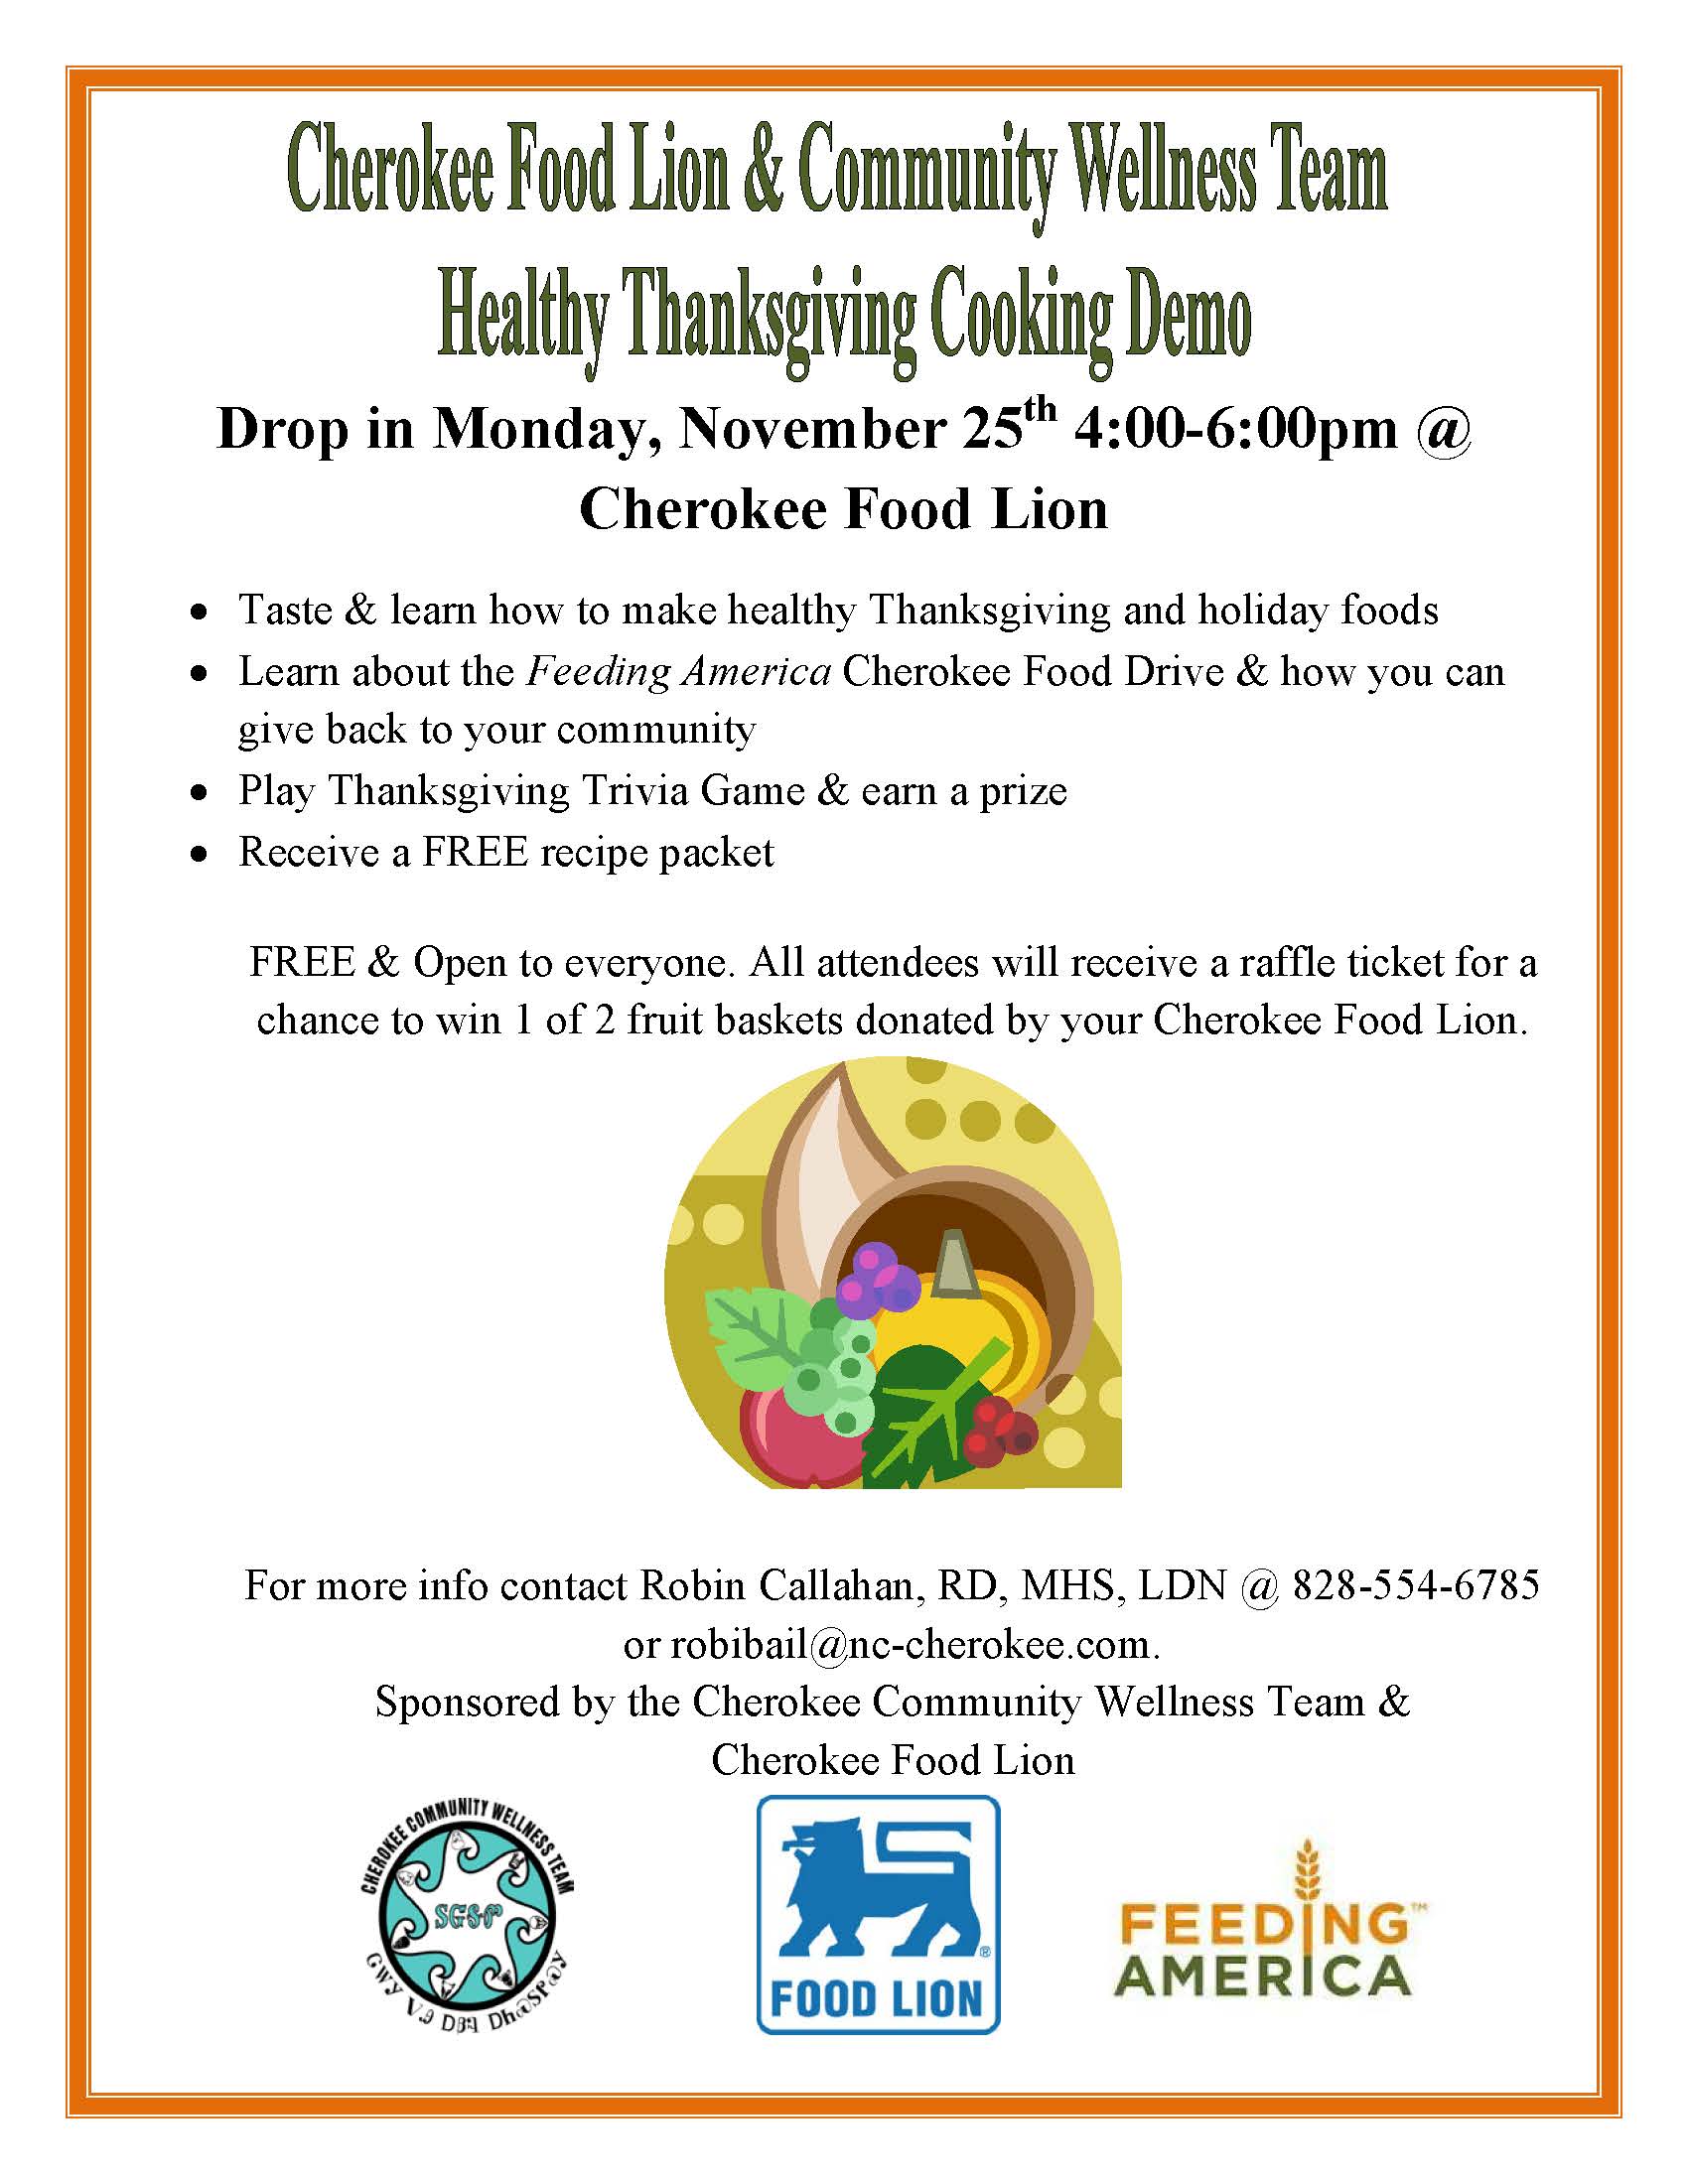 Foodlion Healthy Thanksgiving Demo 2013 Flyer